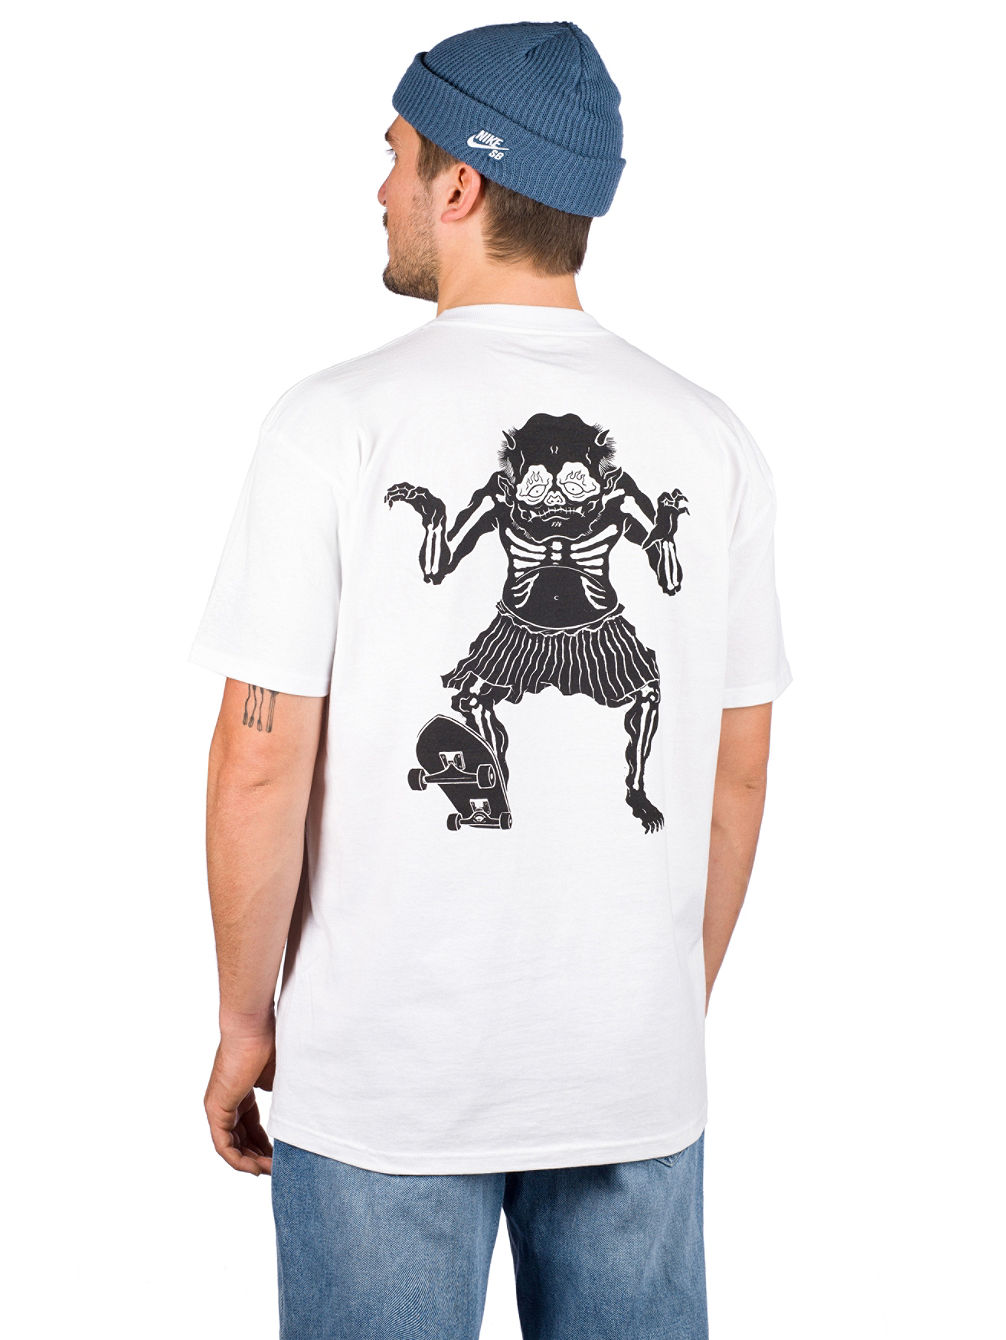 Skate Zombie T-Shirt